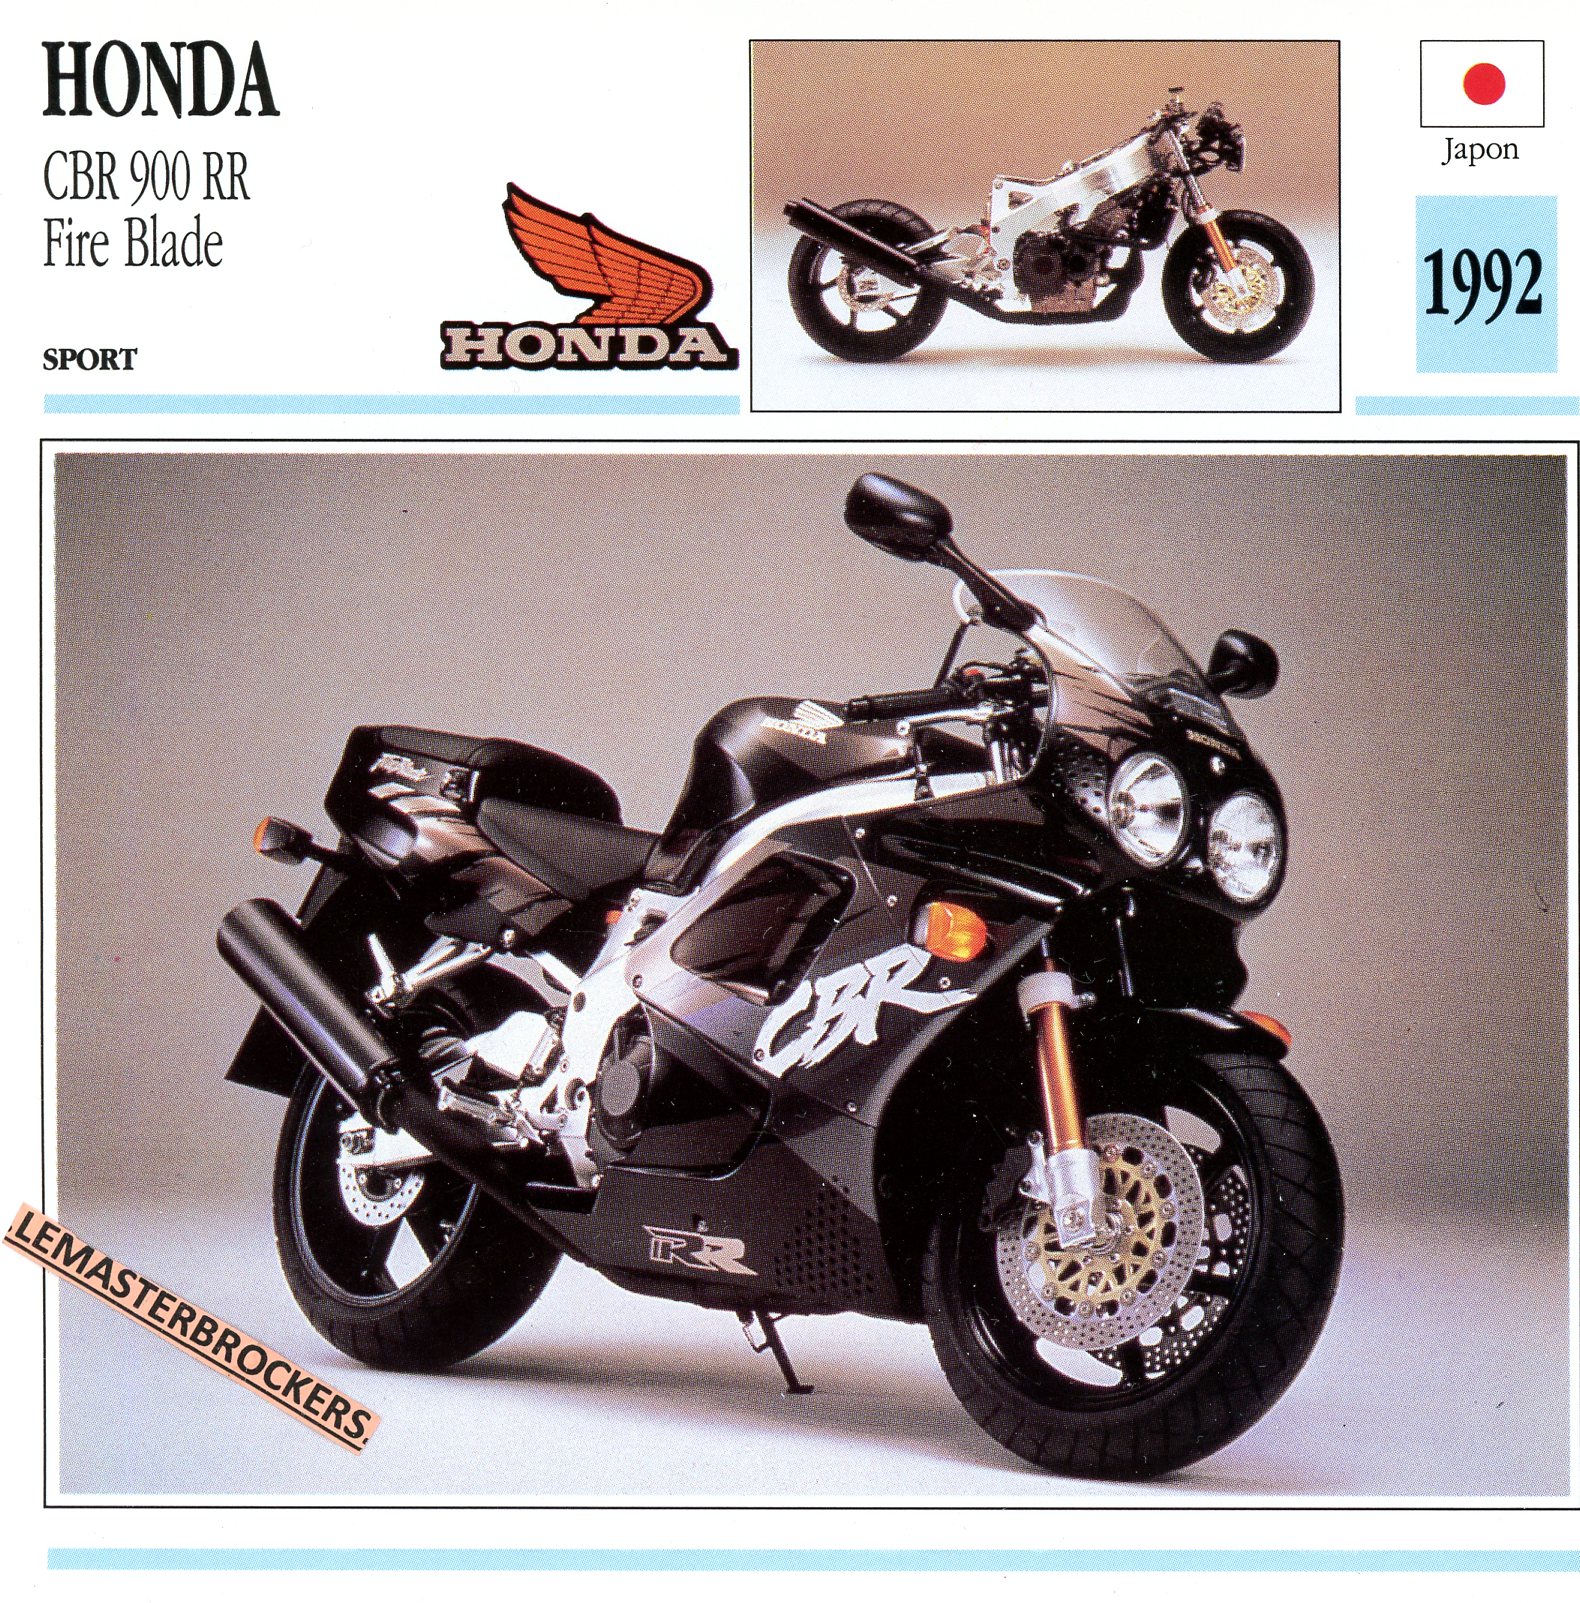 FICHE-MOTO-HONDA-CBR-CBR900RR-FIRE-BLADE-LEMASTERBROCKERS-CARS-MOTORCYCLE-1992